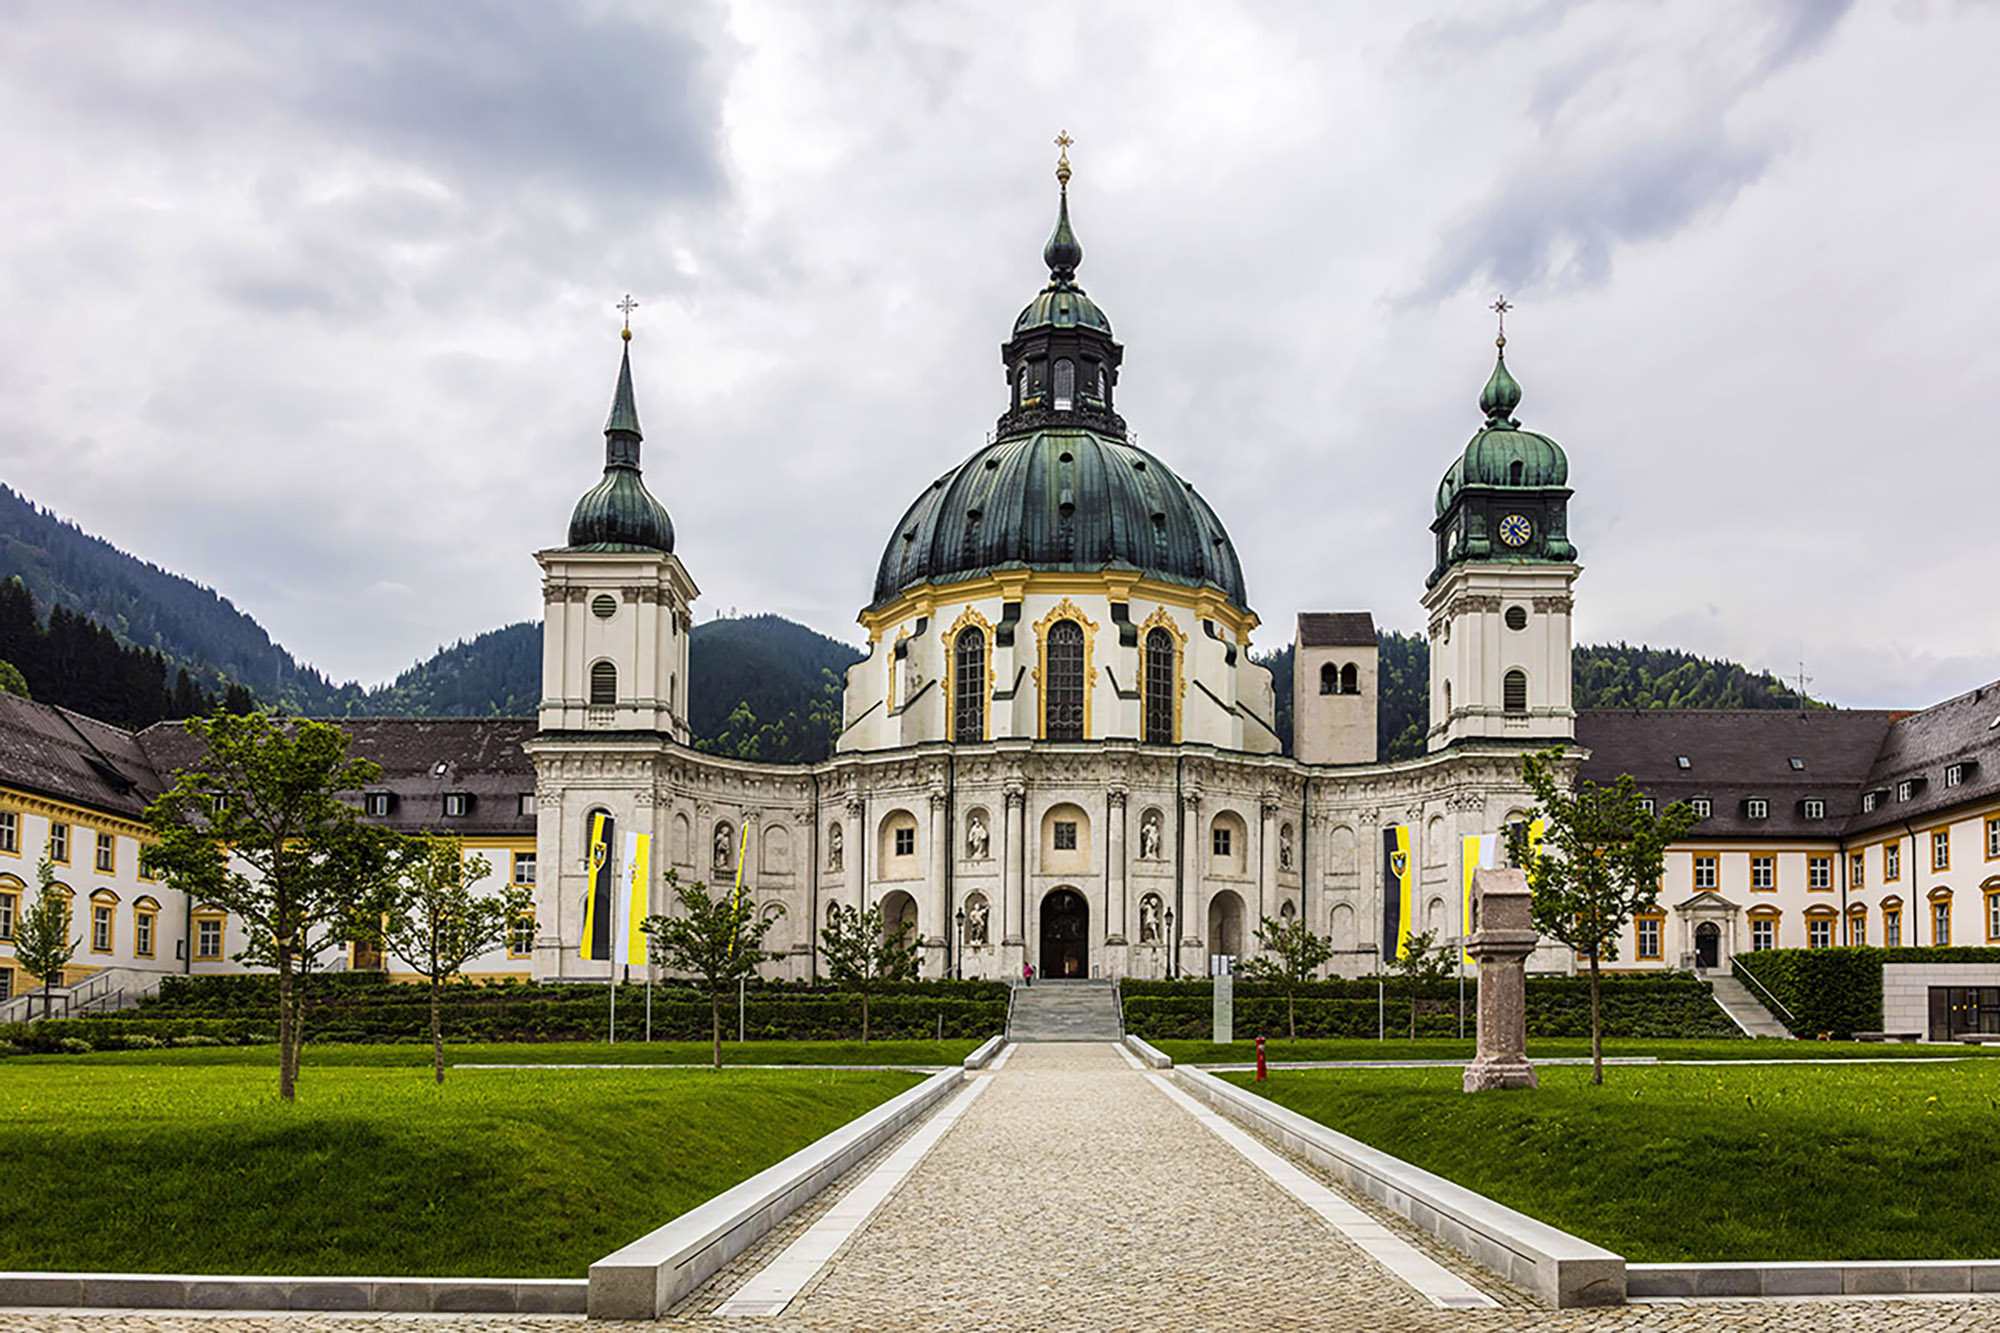 Ettal Monastery in Bavaria by Dennis Deeny